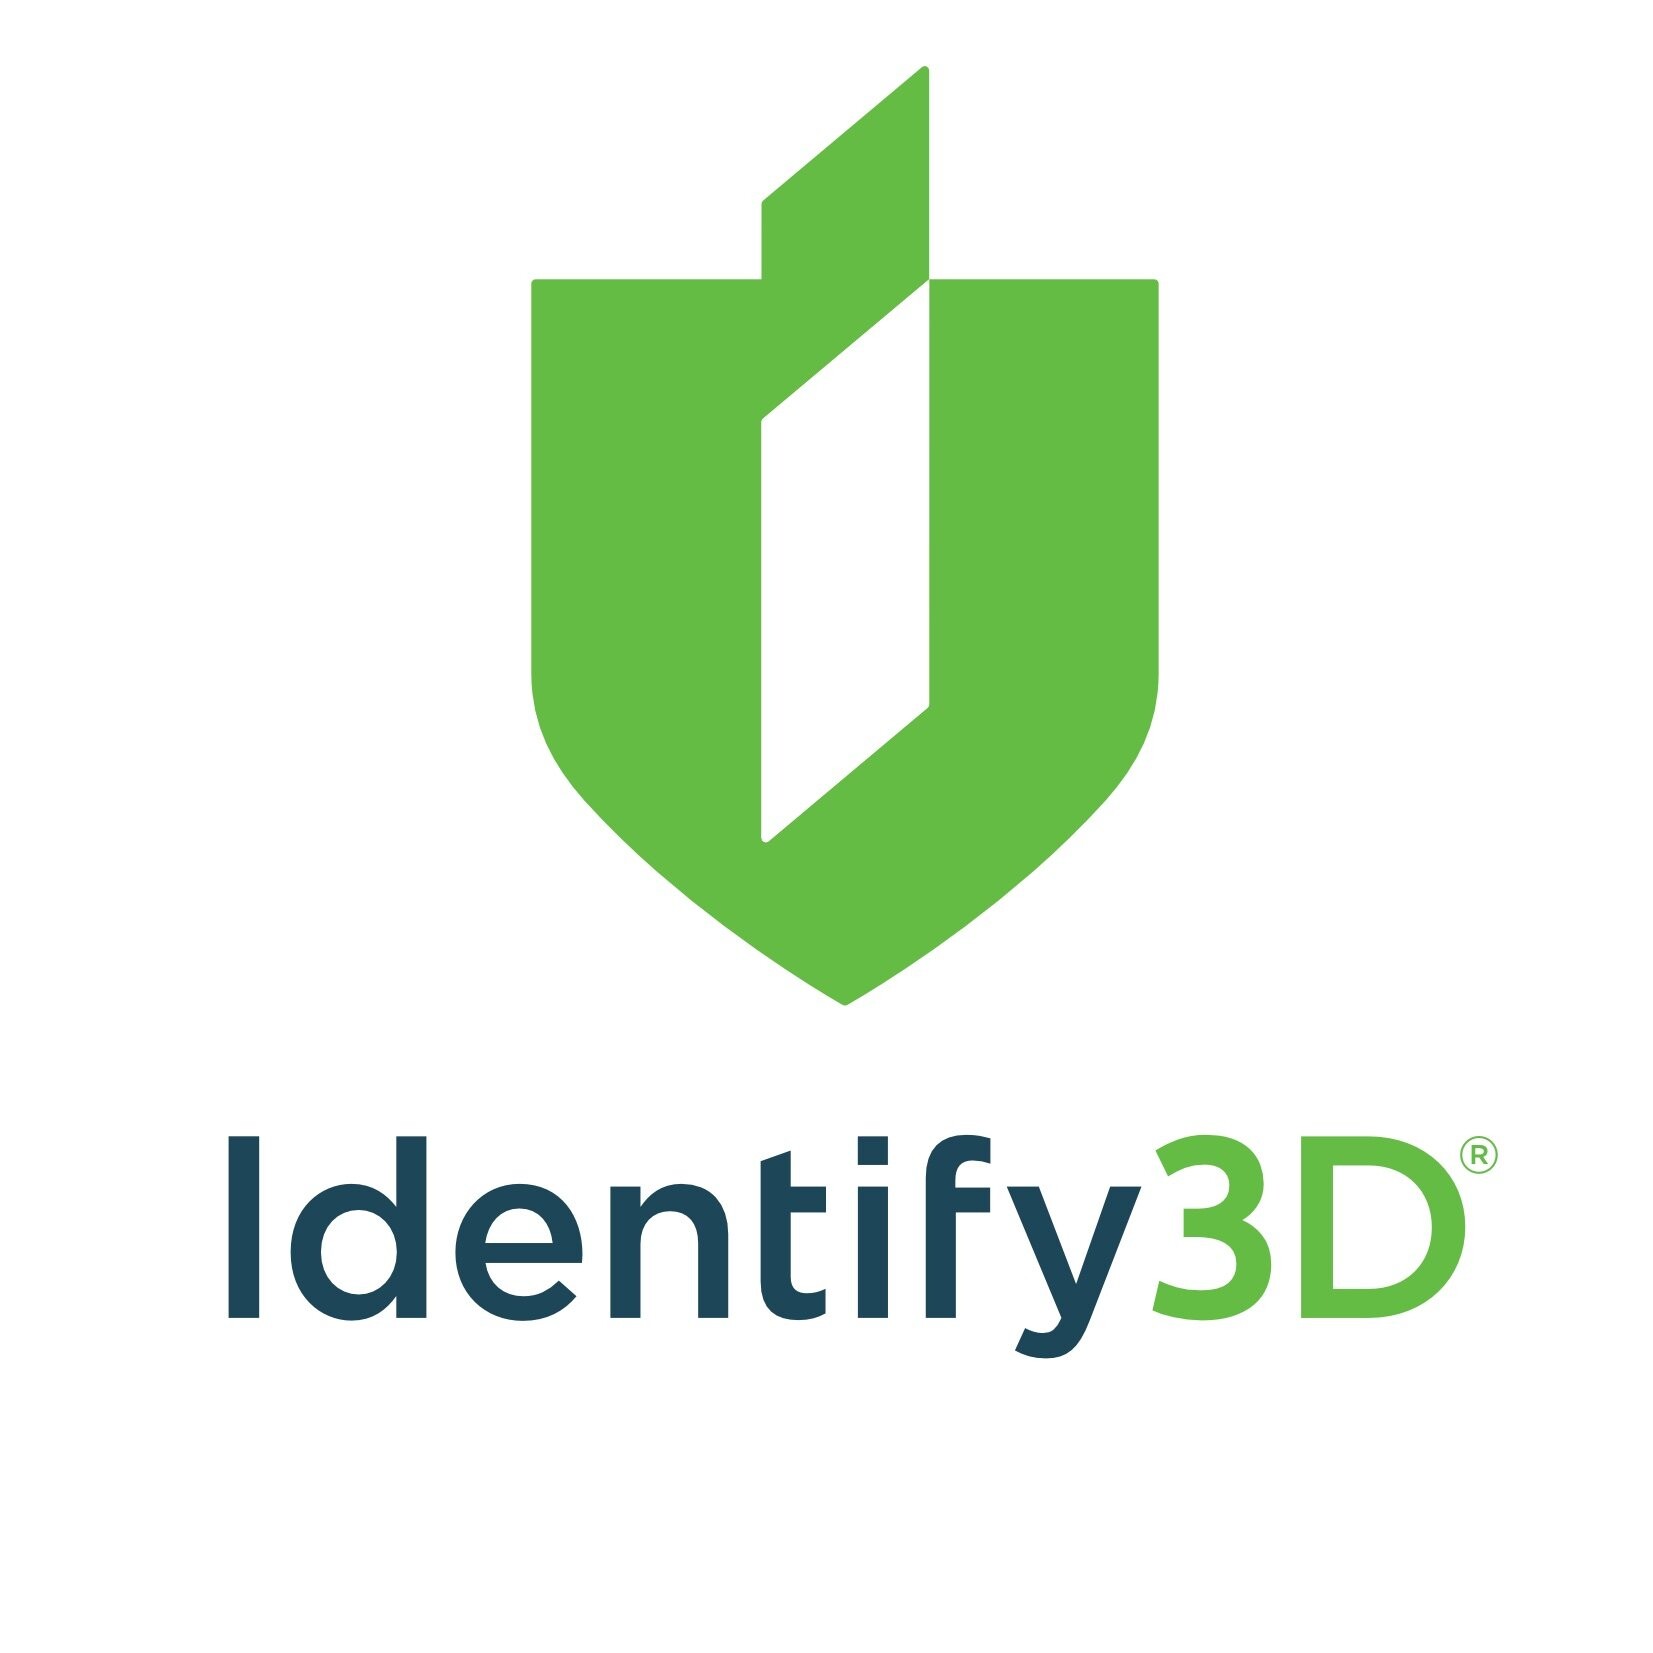 Identify3D